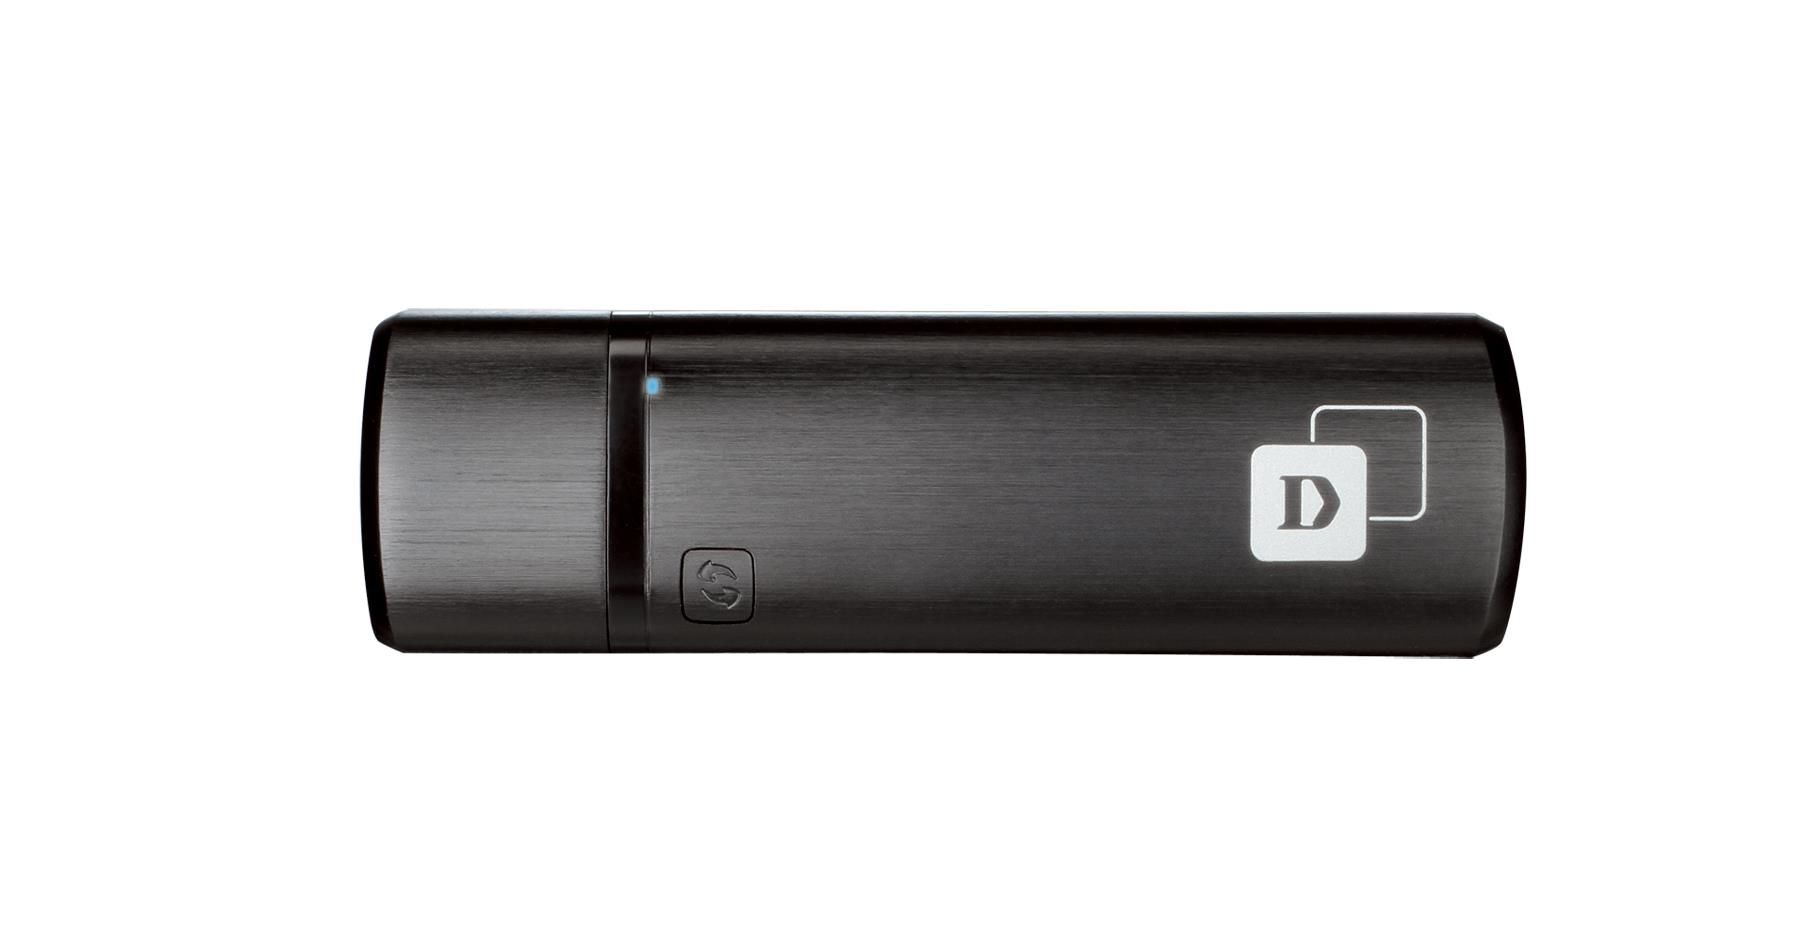 D-link DWA-182 Wireless Ac